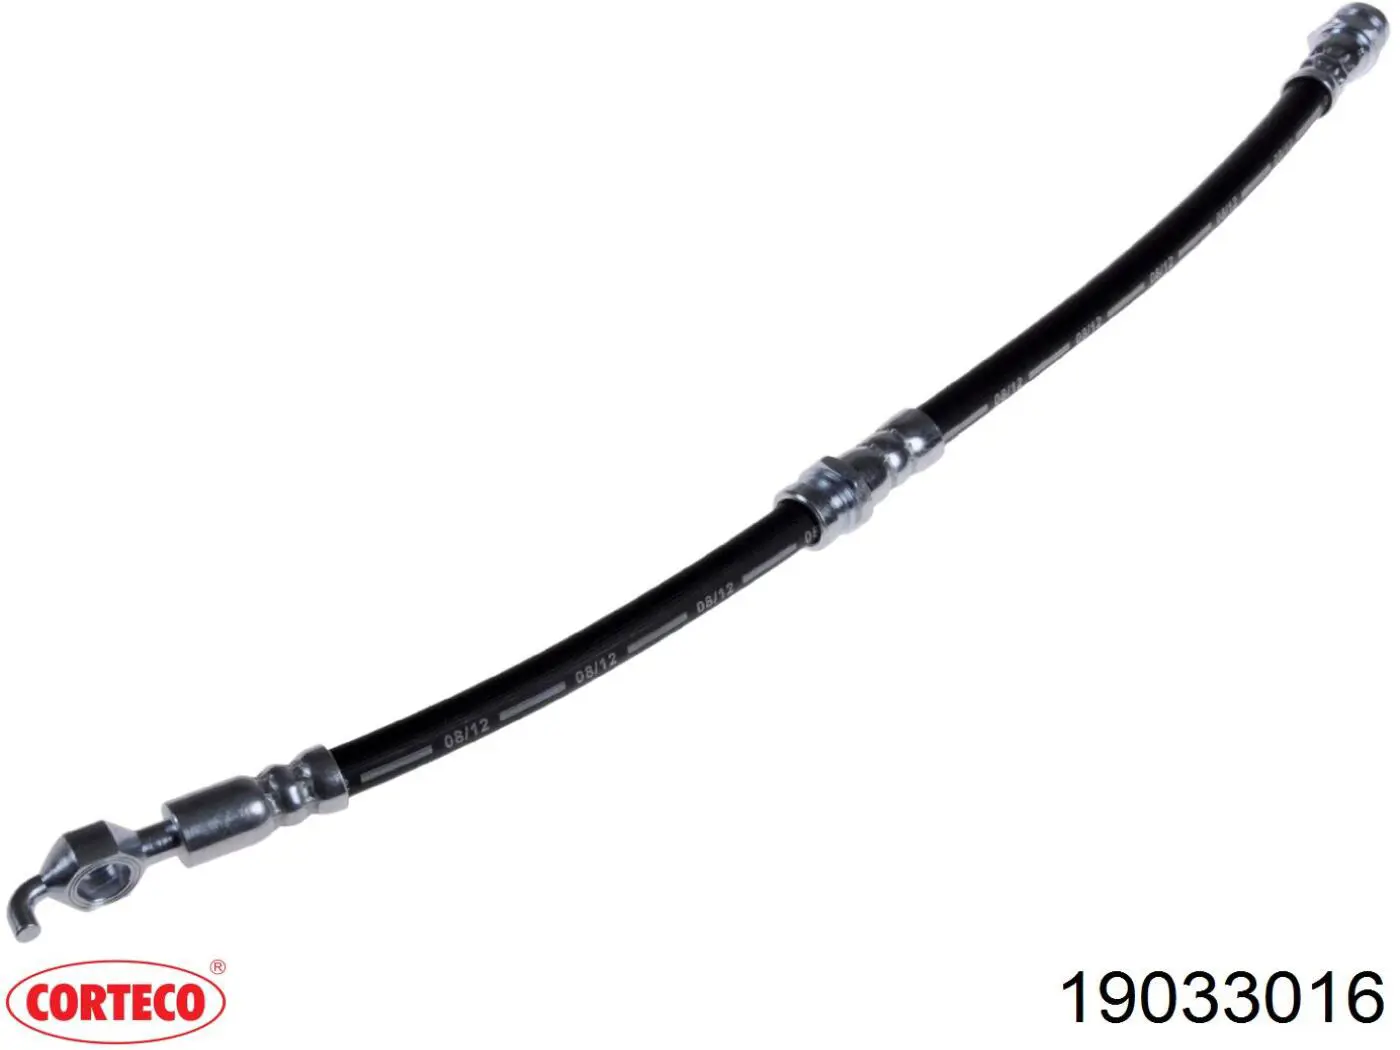 19033016 Corteco latiguillo de freno delantero